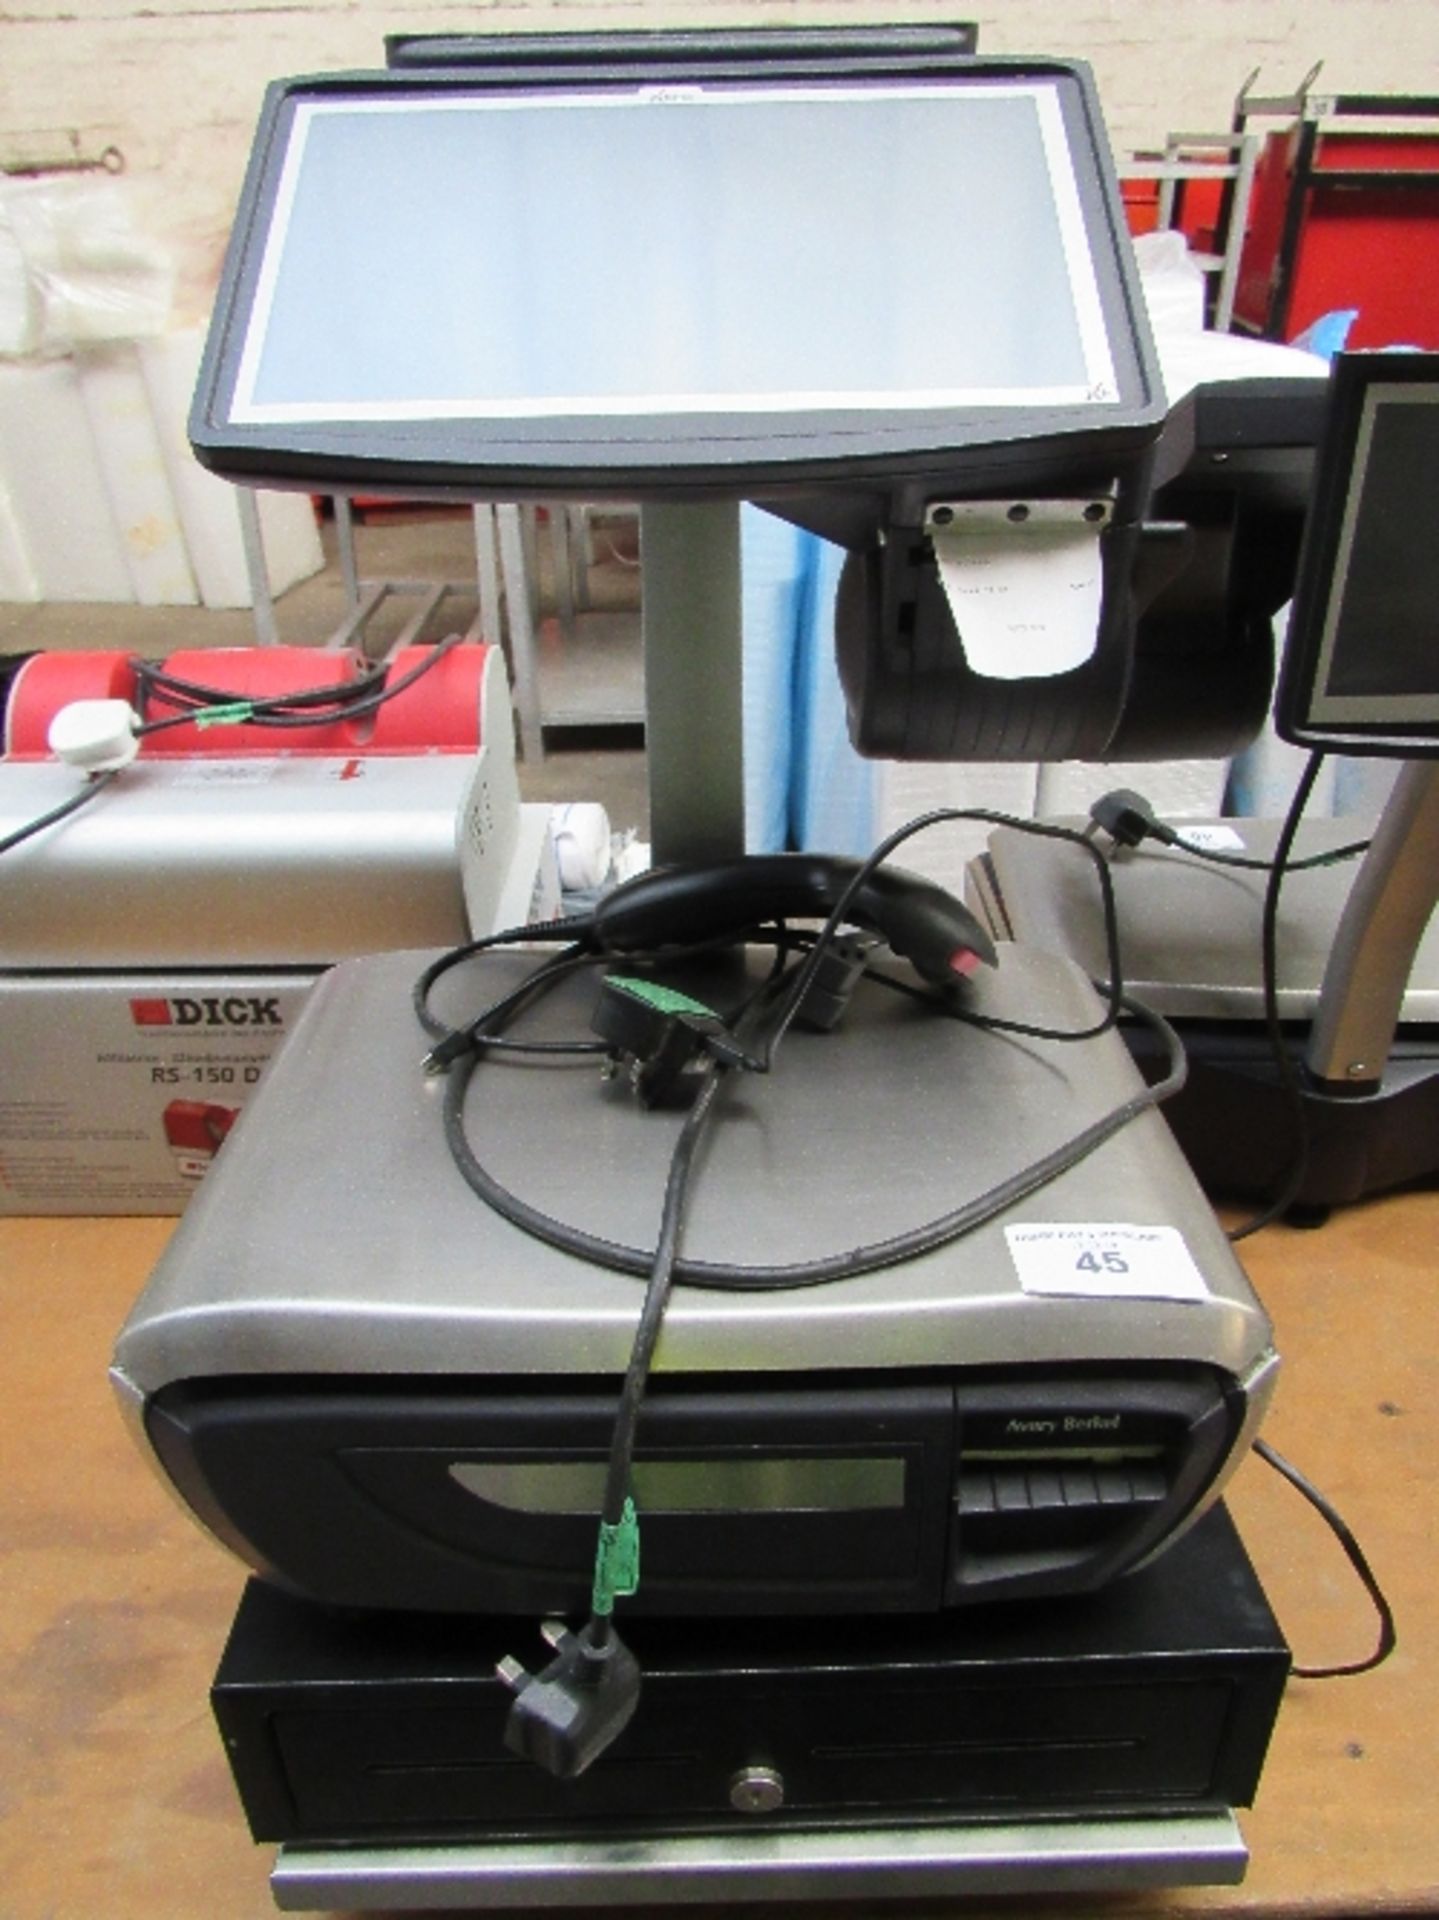 Avery Berkel XT420 scales together with cash dispenser & Honeywell scanner